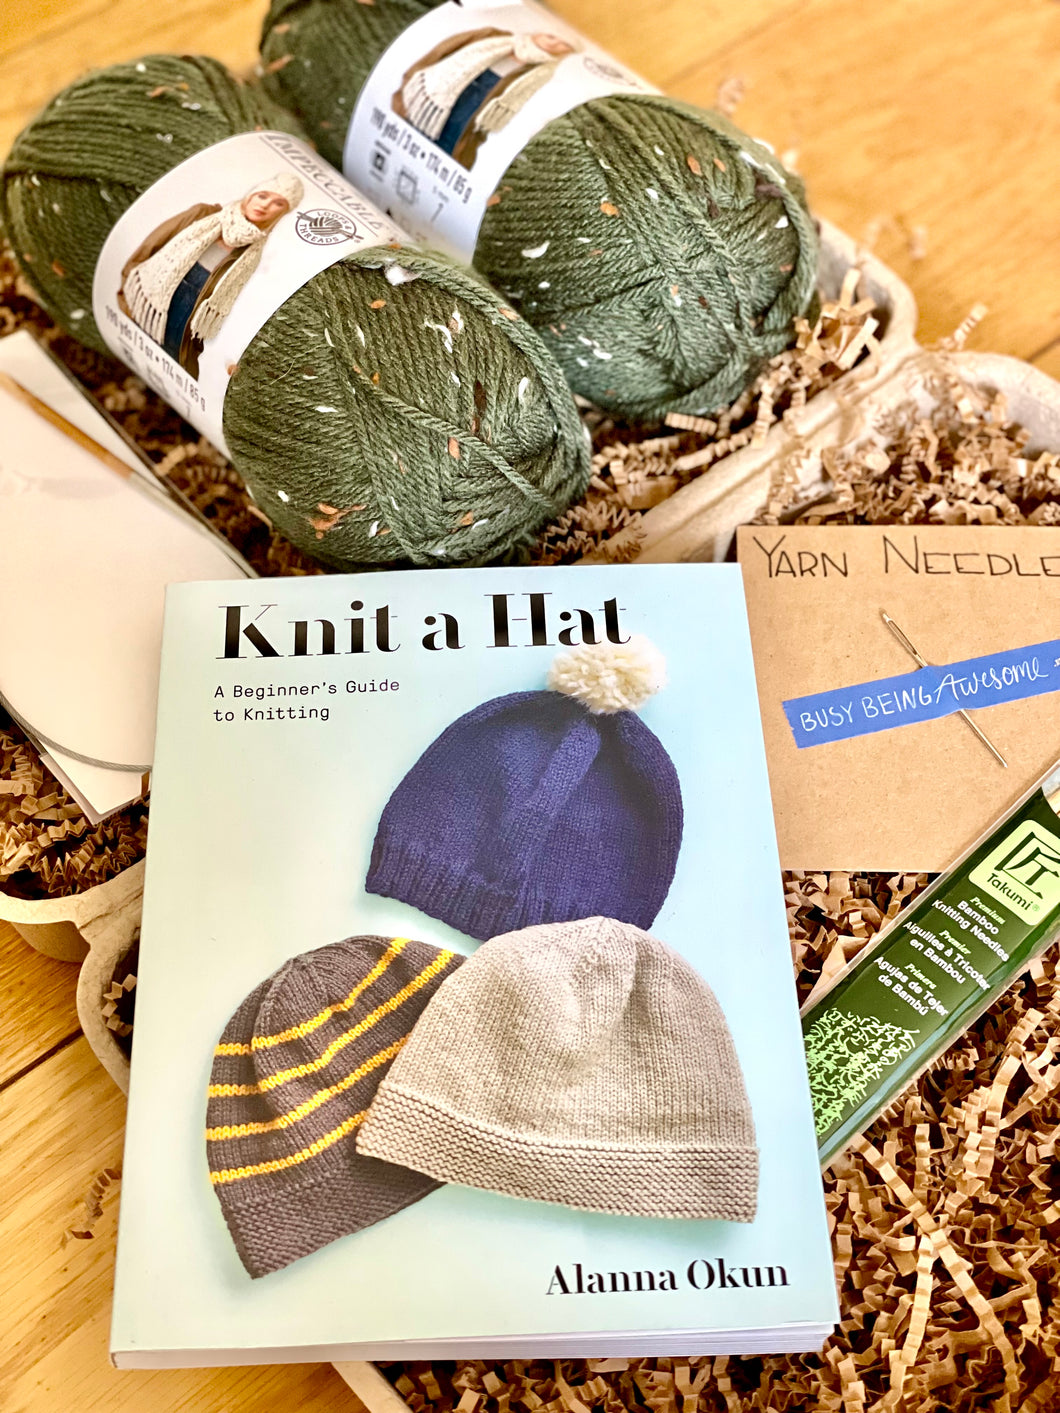 “Knit a Hat” Knitting Kit